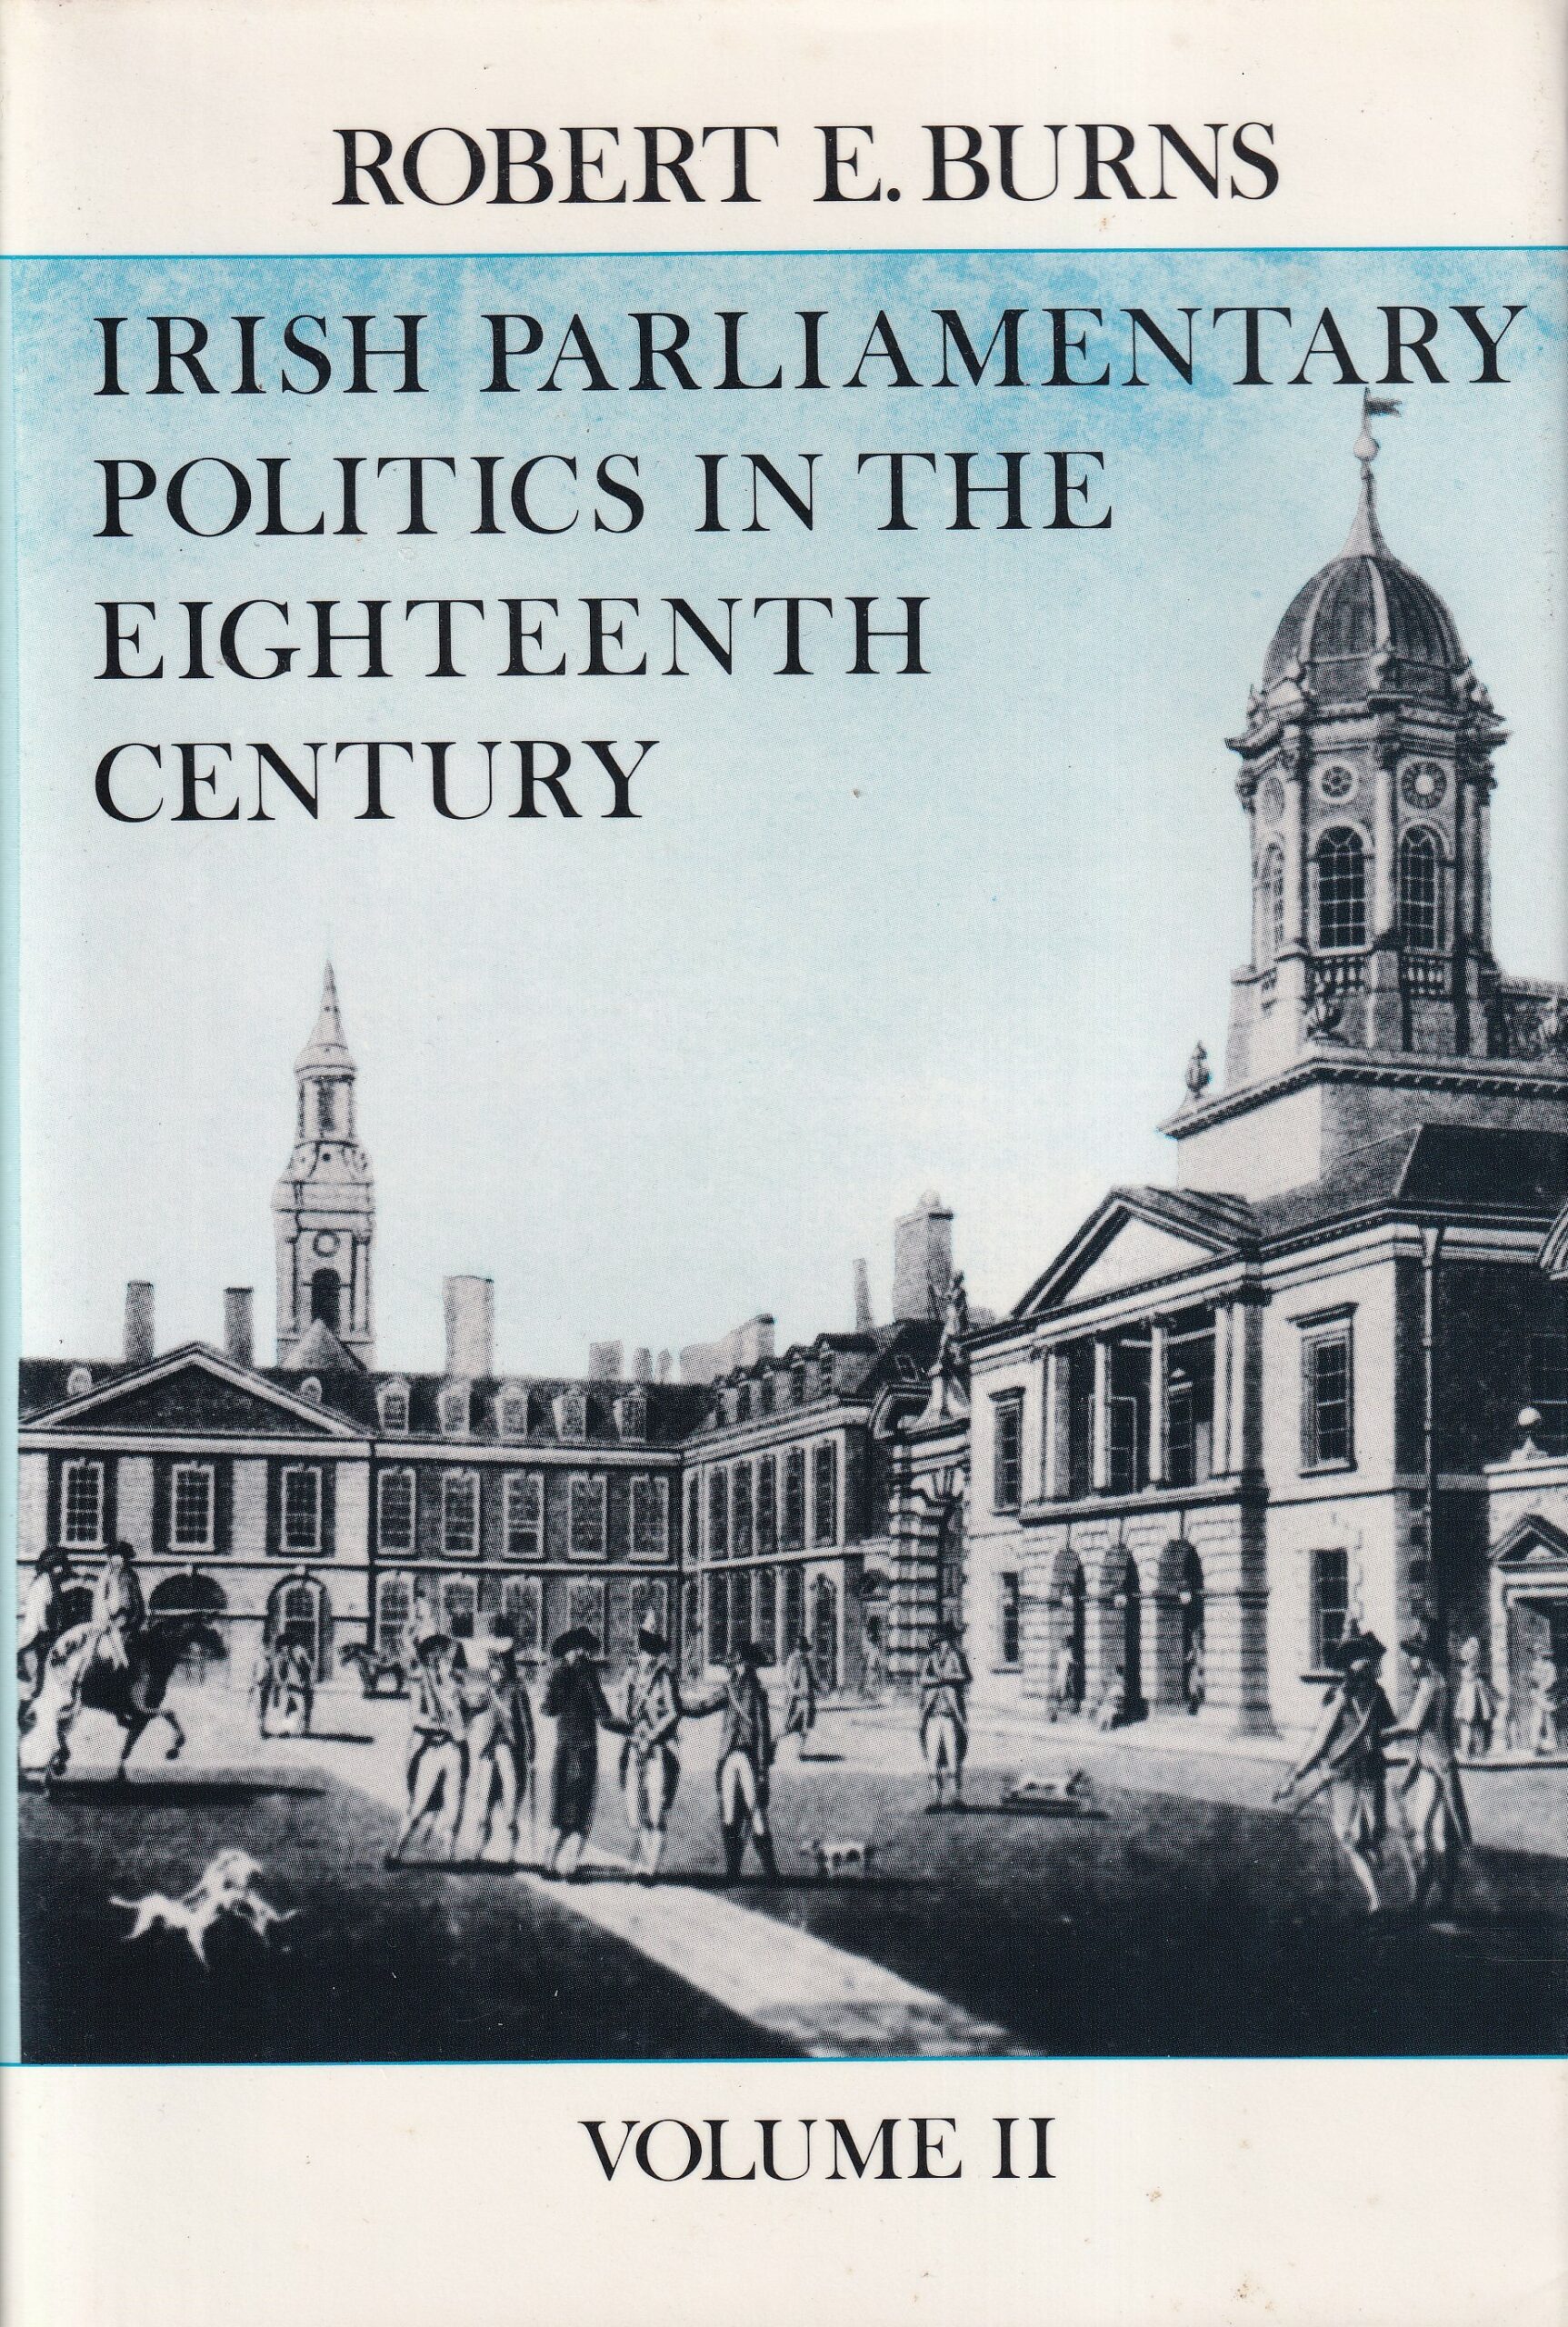 Irish Parliamentary Politics in the Eighteenth Century Vol ll by Robert E. Burns